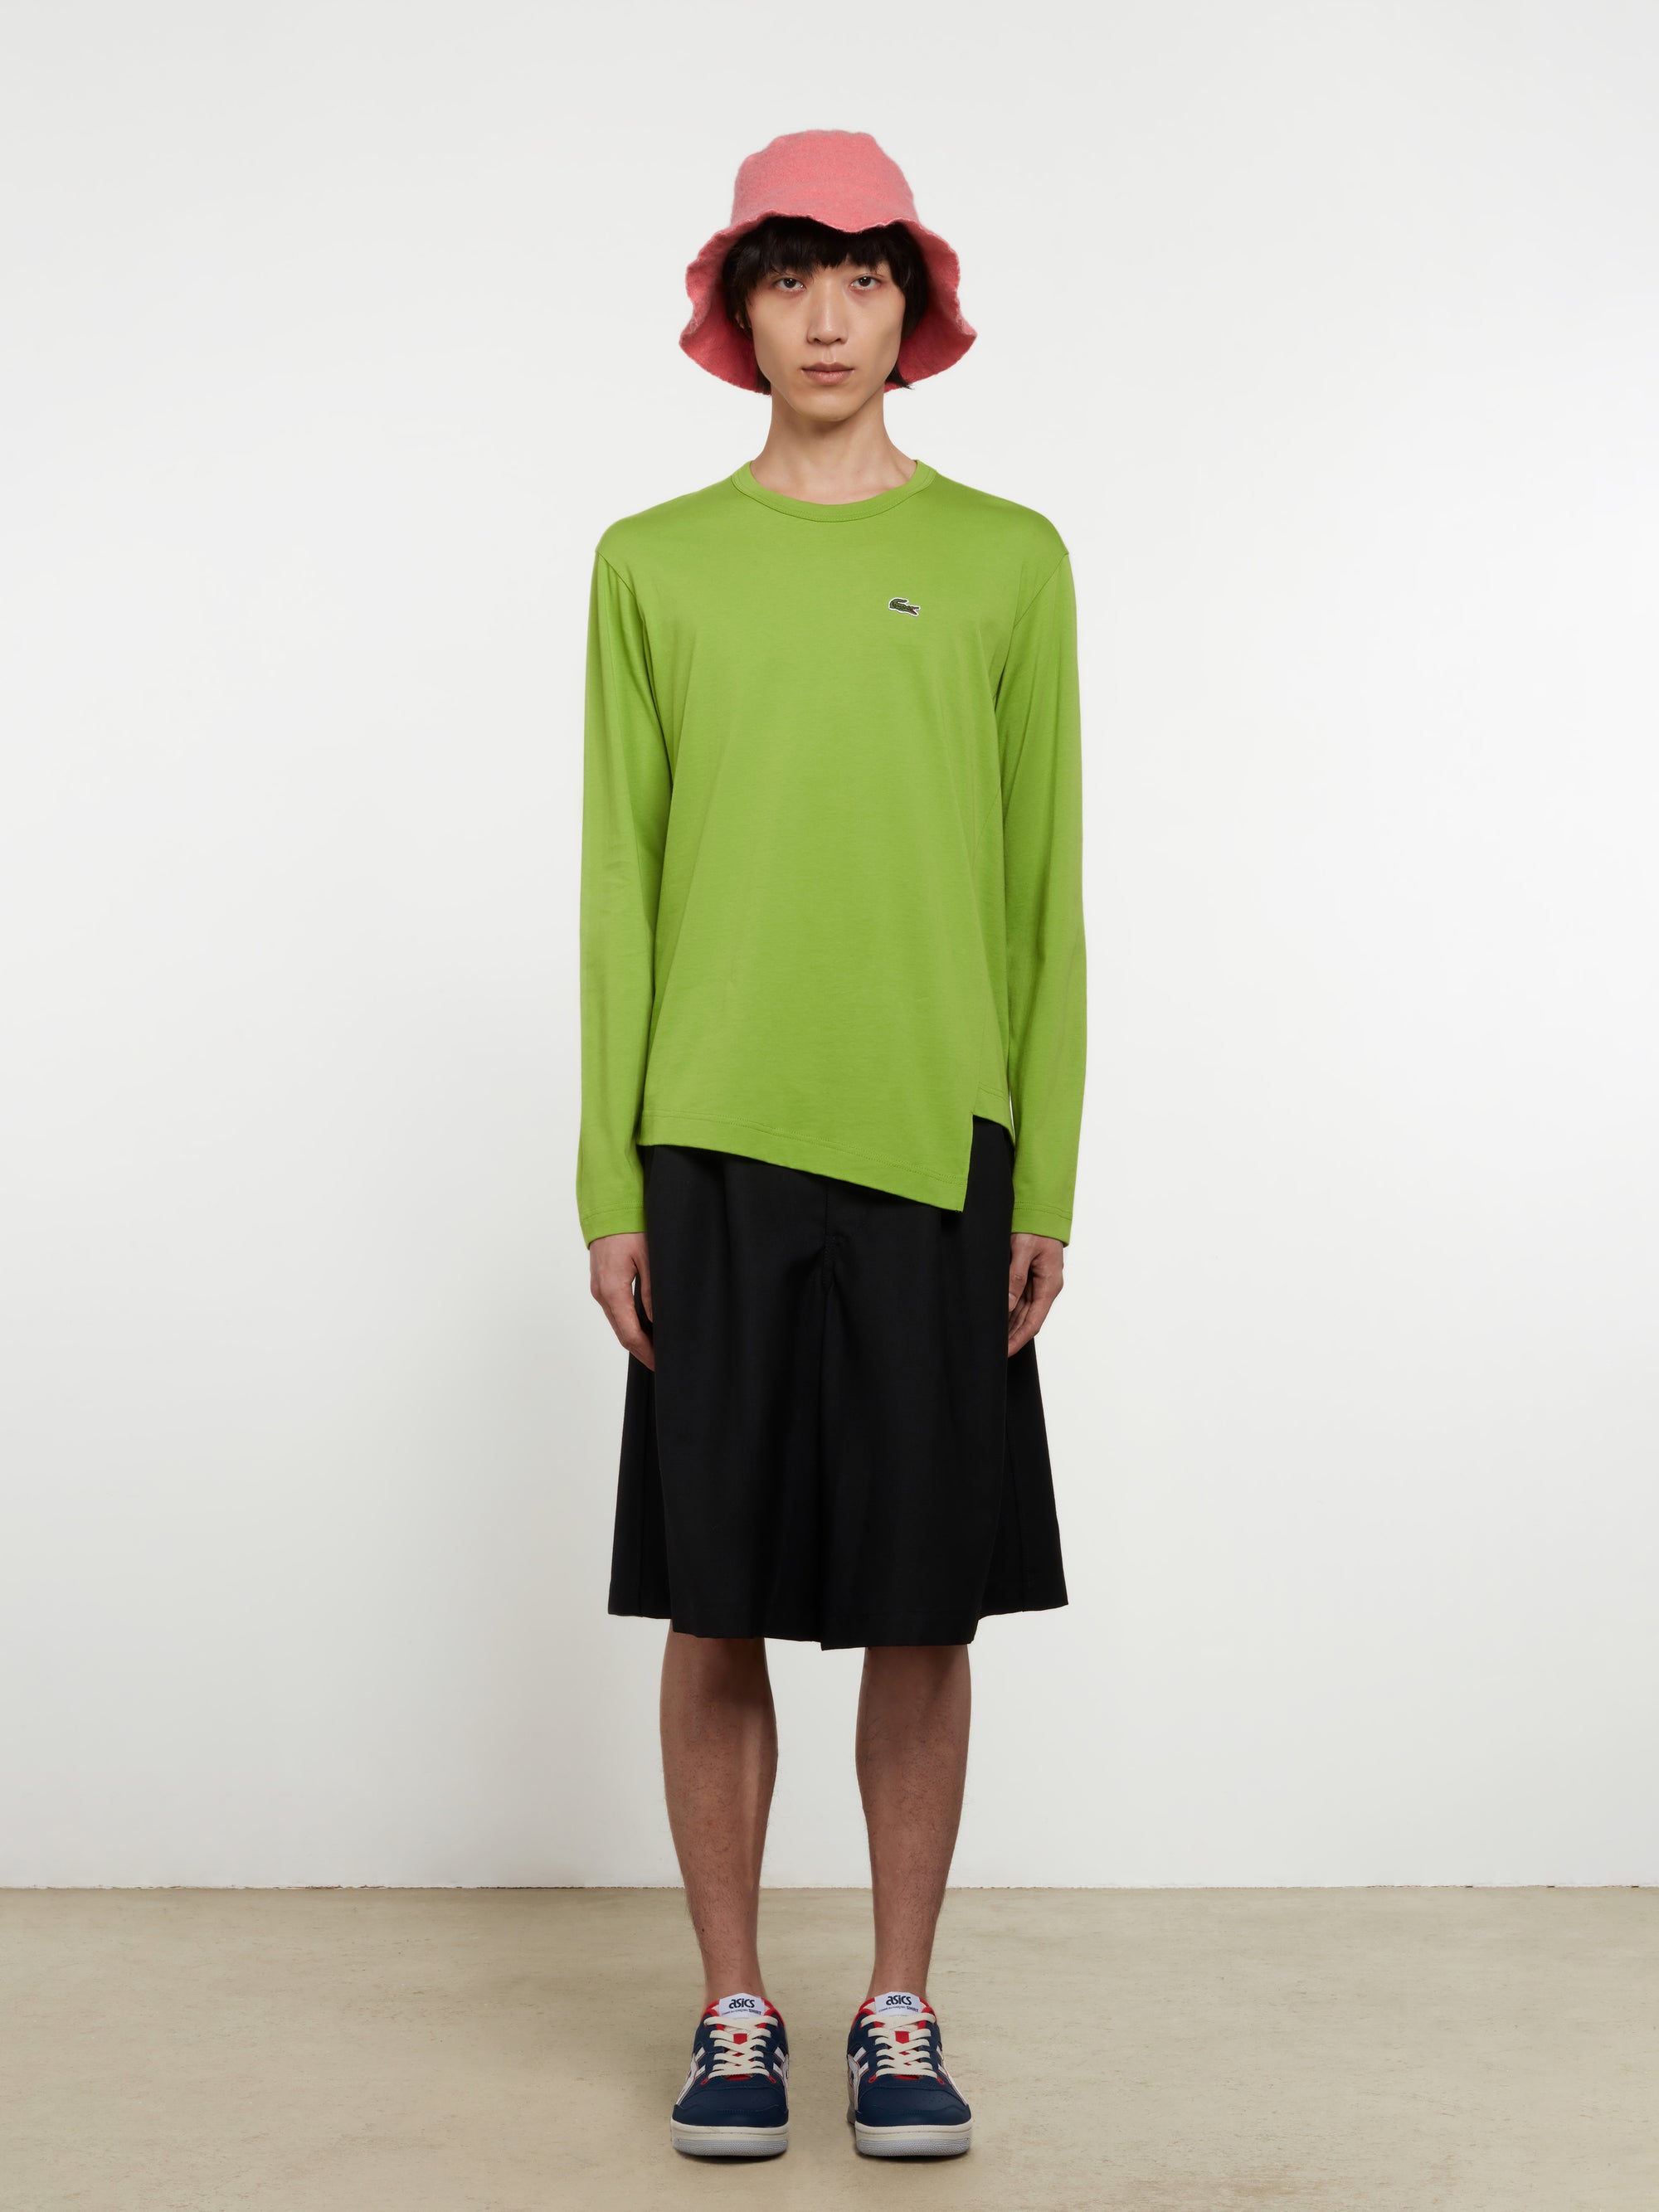 CDG Shirt - Lacoste Men’s Long Sleeve T-Shirt - (Green) view 4